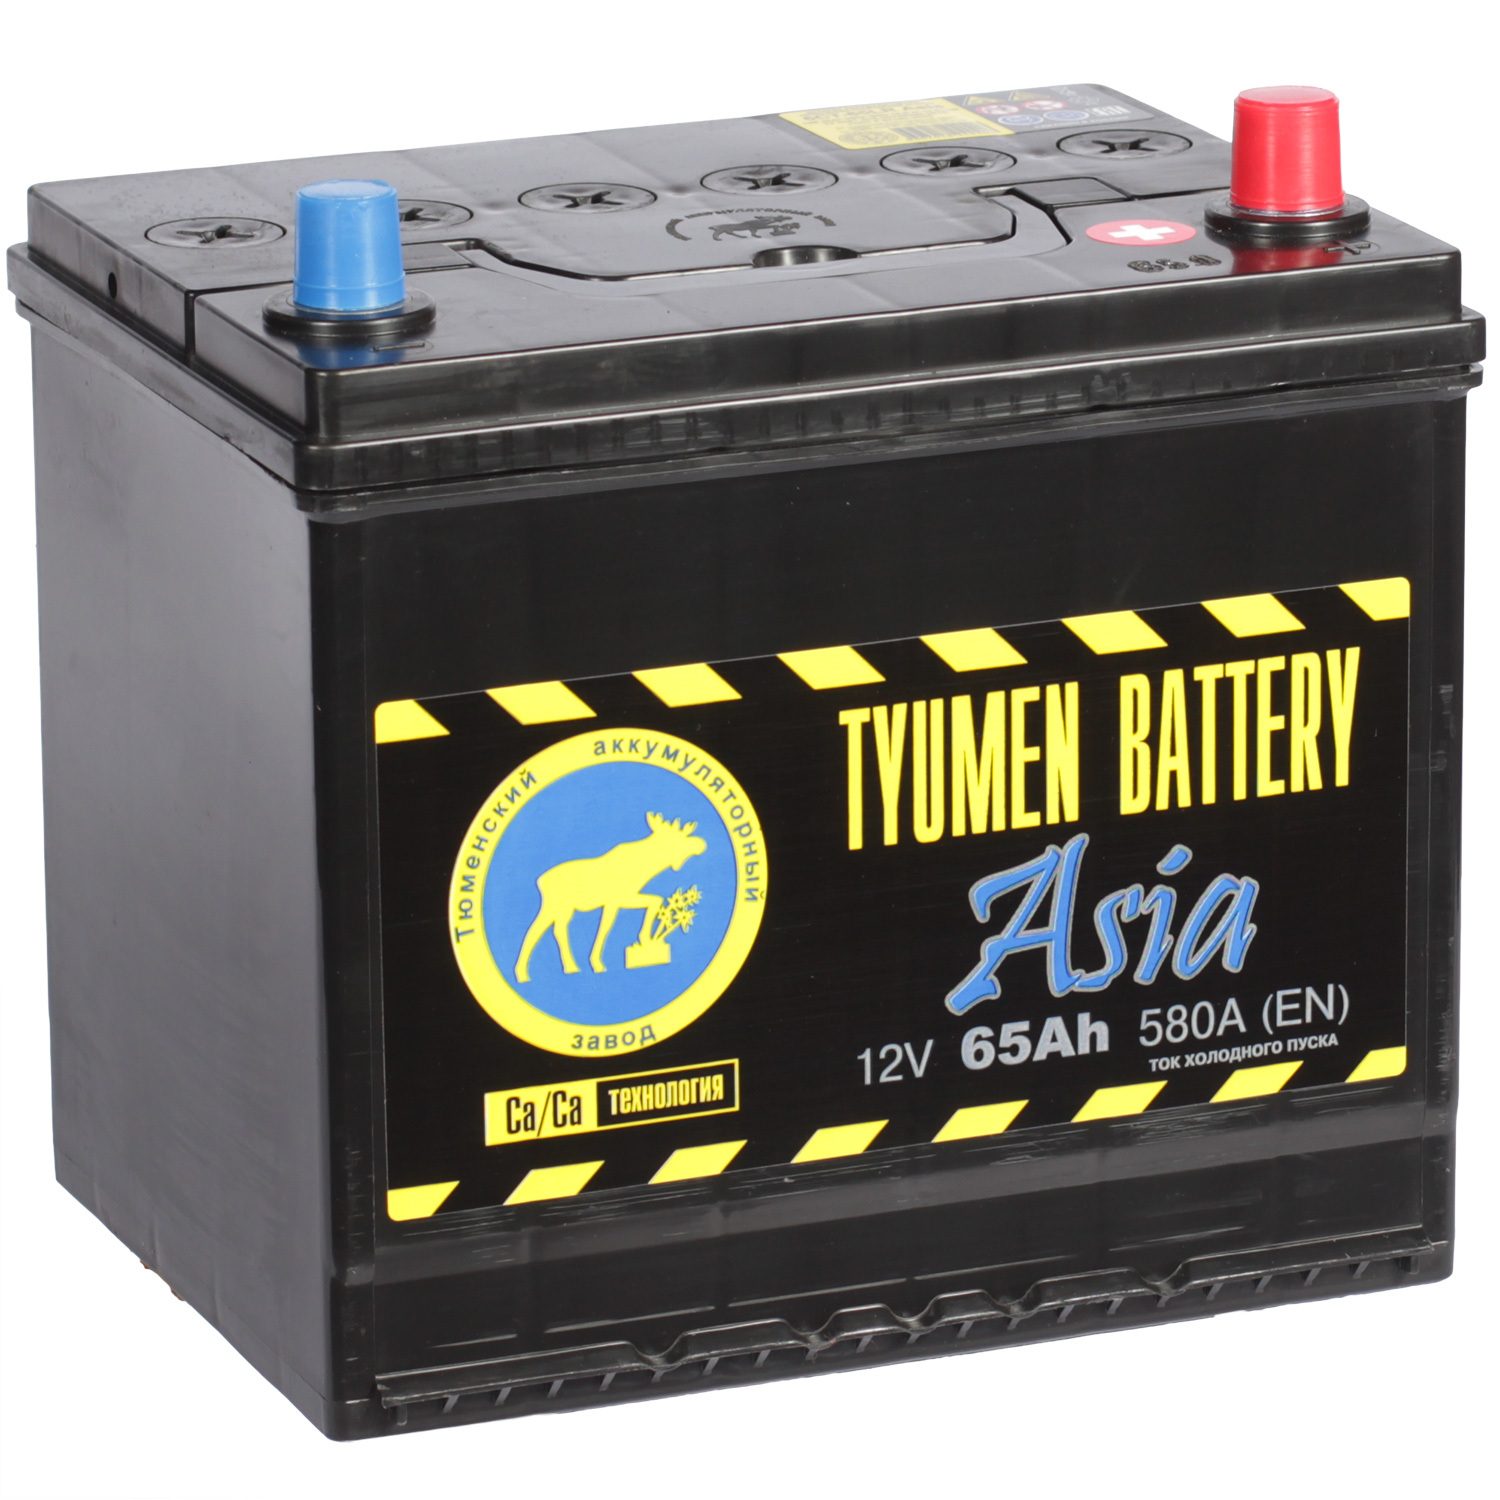 Tyumen Battery Автомобильный аккумулятор Tyumen Battery Asia 65 Ач обратная полярность D23L tyumen battery автомобильный аккумулятор tyumen battery premium 50 ач обратная полярность l1